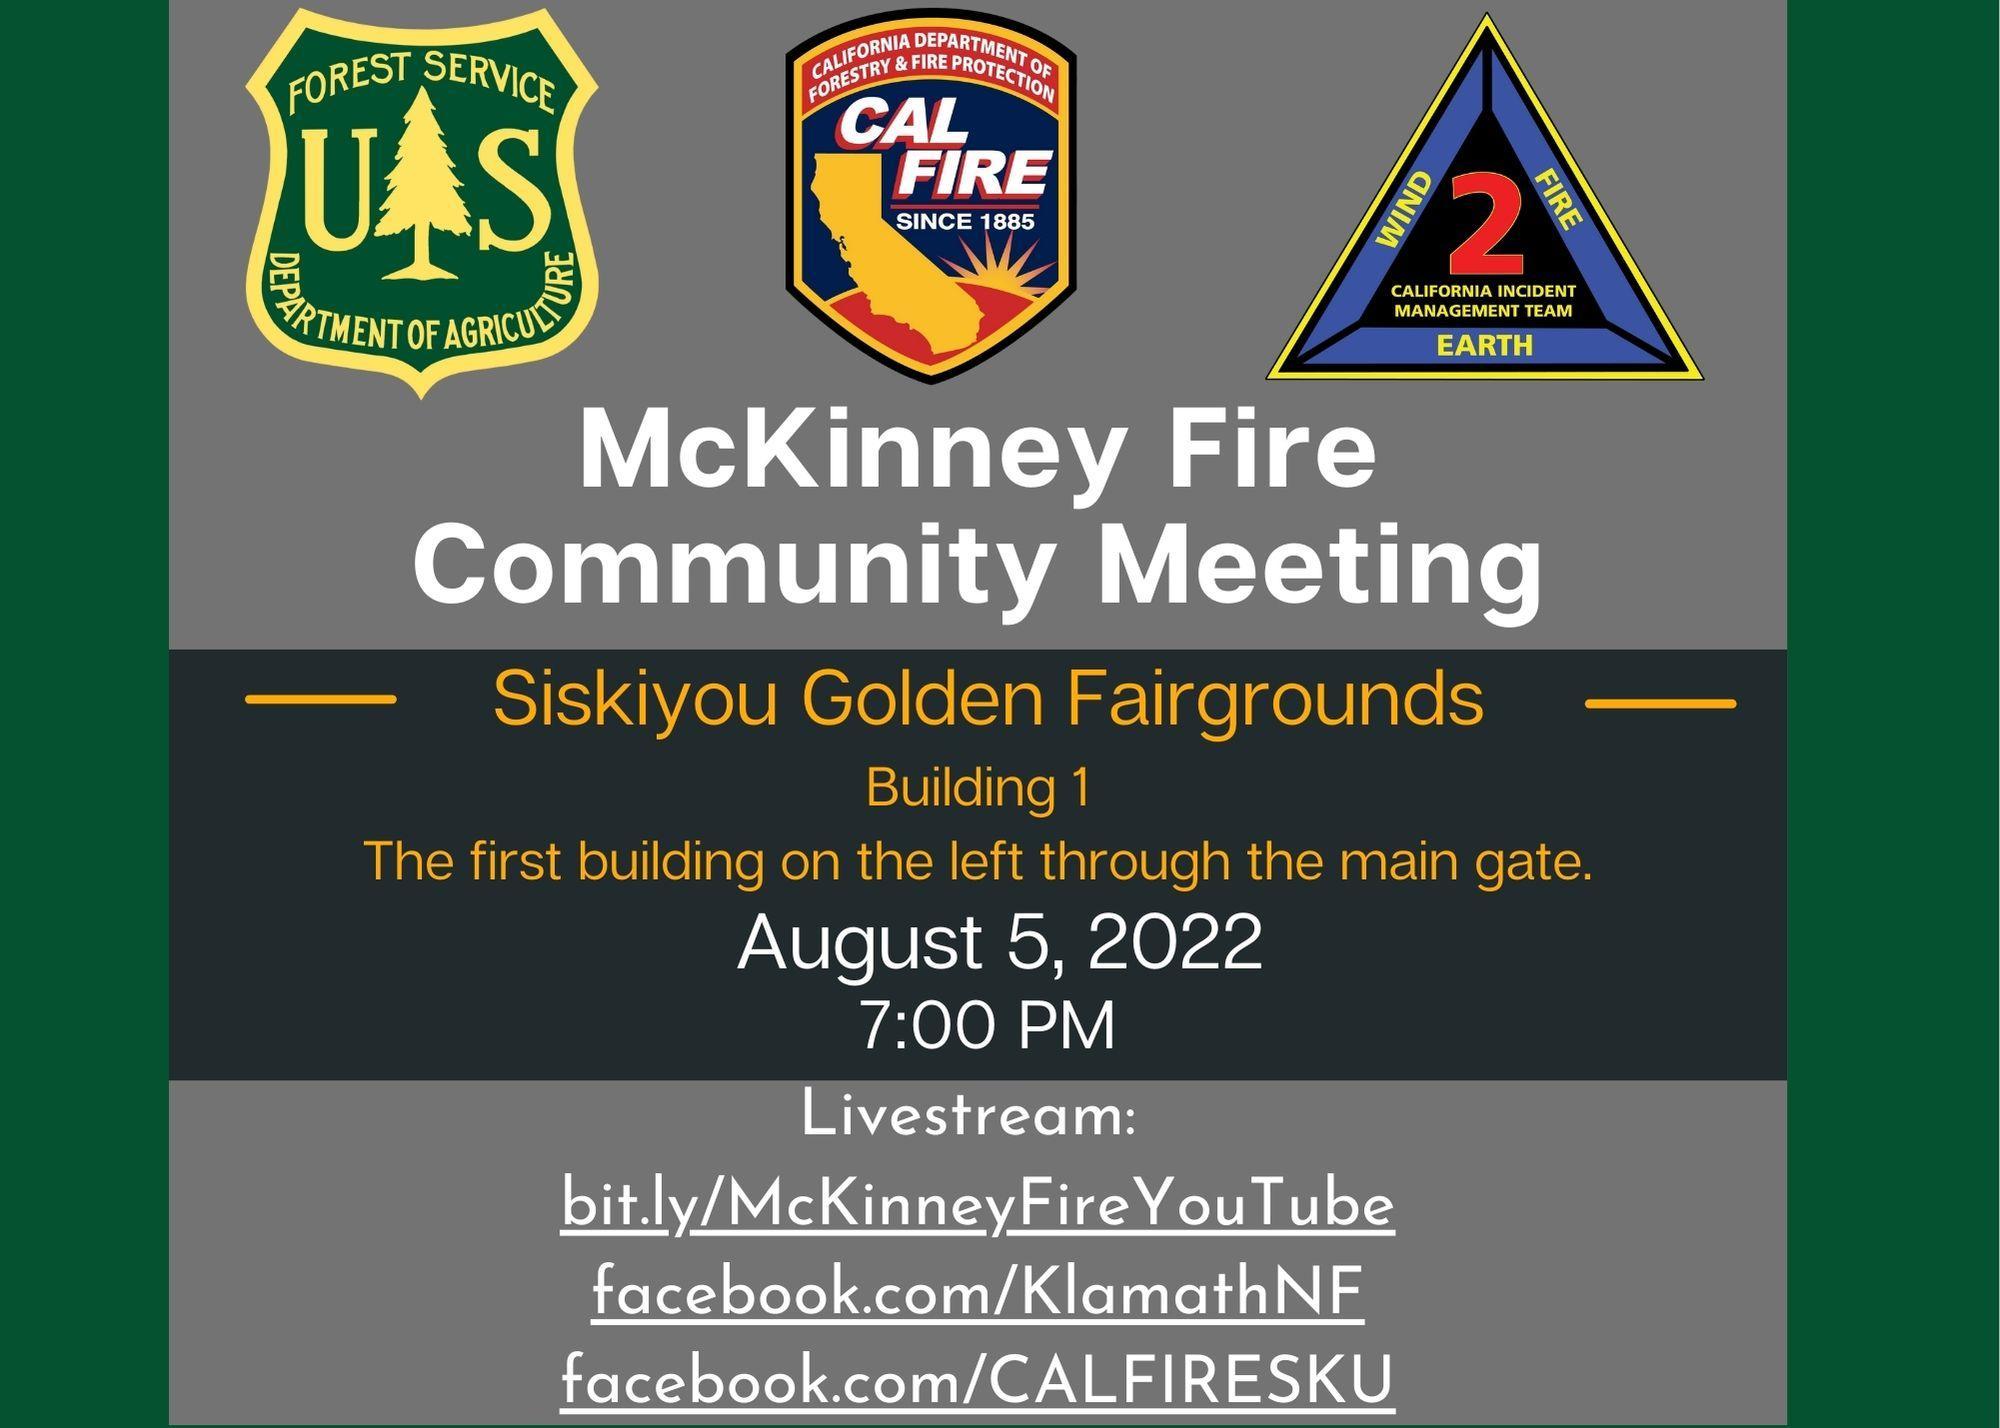 McKinney Community Meeting 8/5/22 7PM